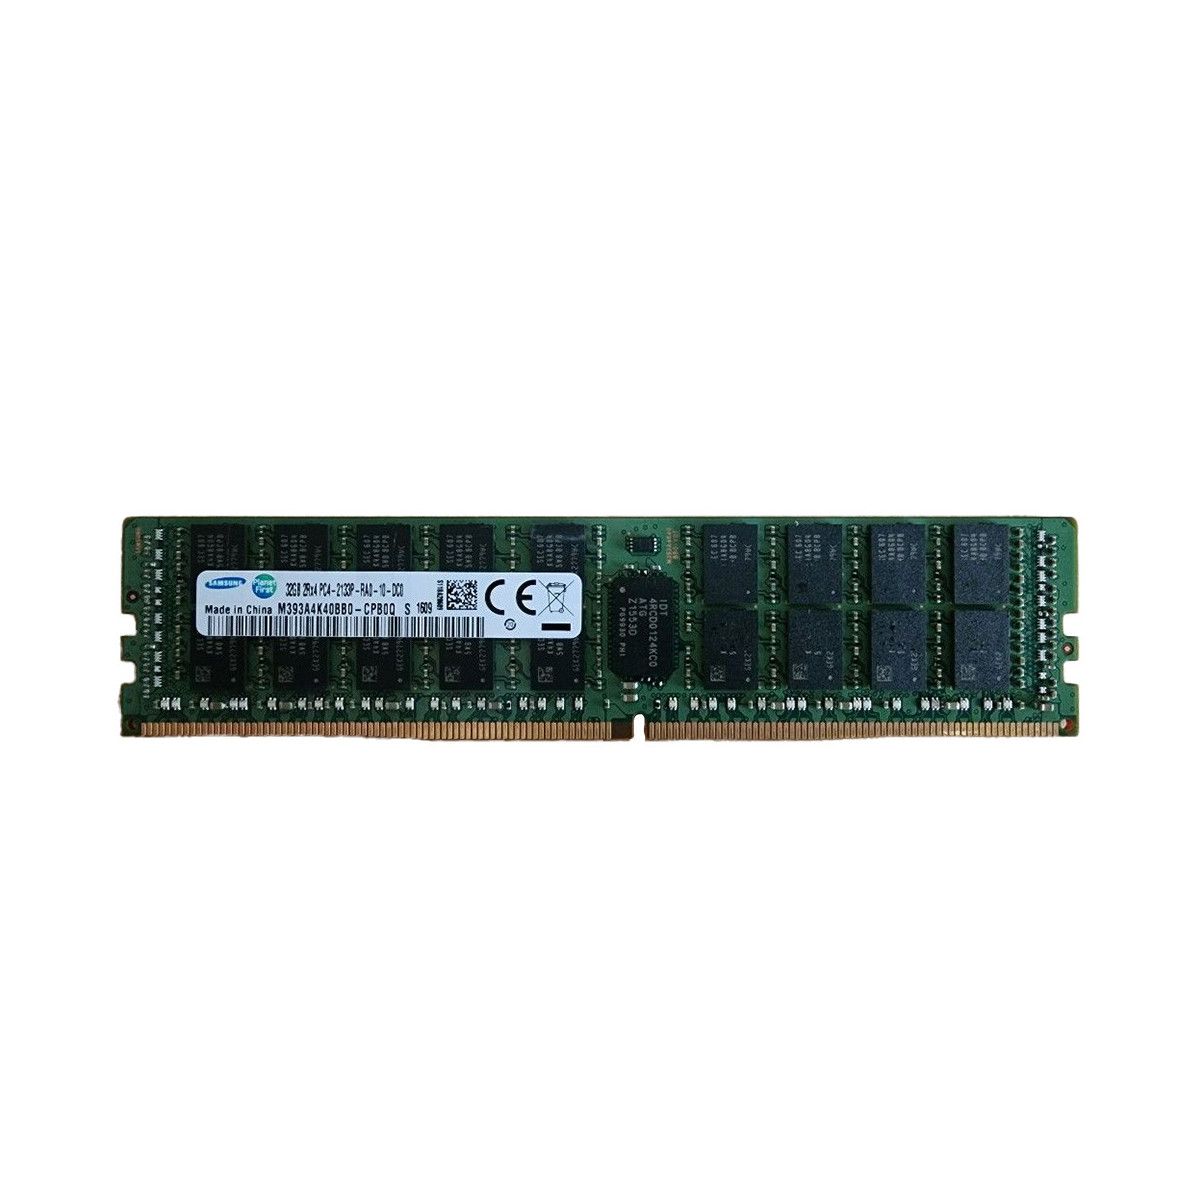 728629-B21-MS - Memstar 1x 32GB DDR4-2133 RDIMM PC4-17000P-R - Mem-Star OEM compatibile Memoria 1 - Memstar 